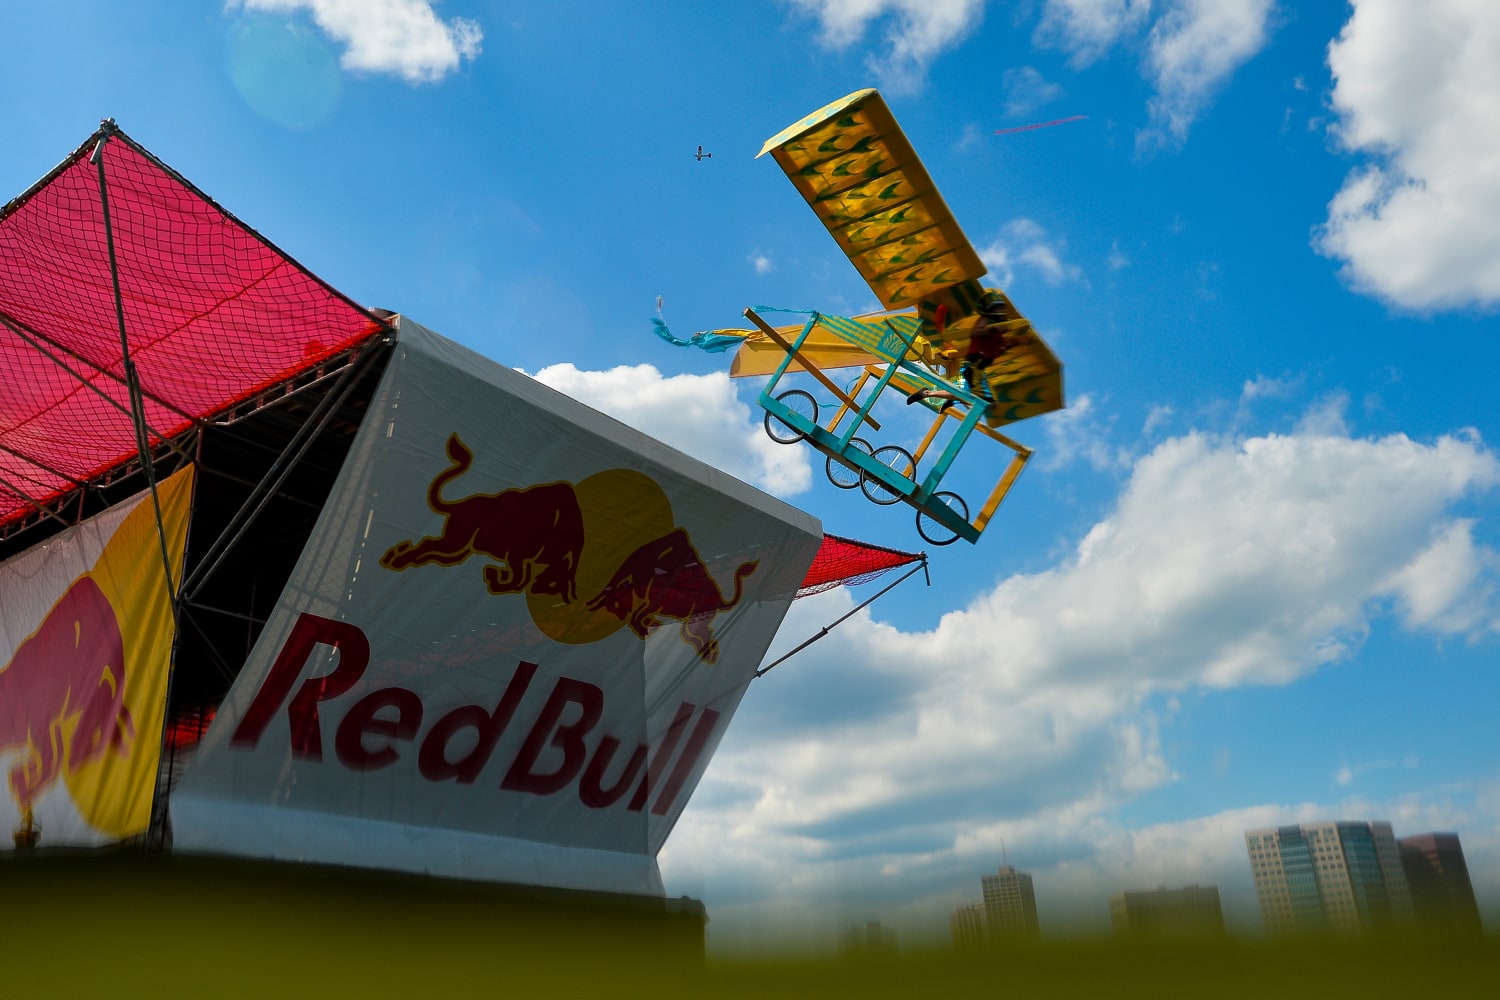 Bull Flugtag: flying machines - show